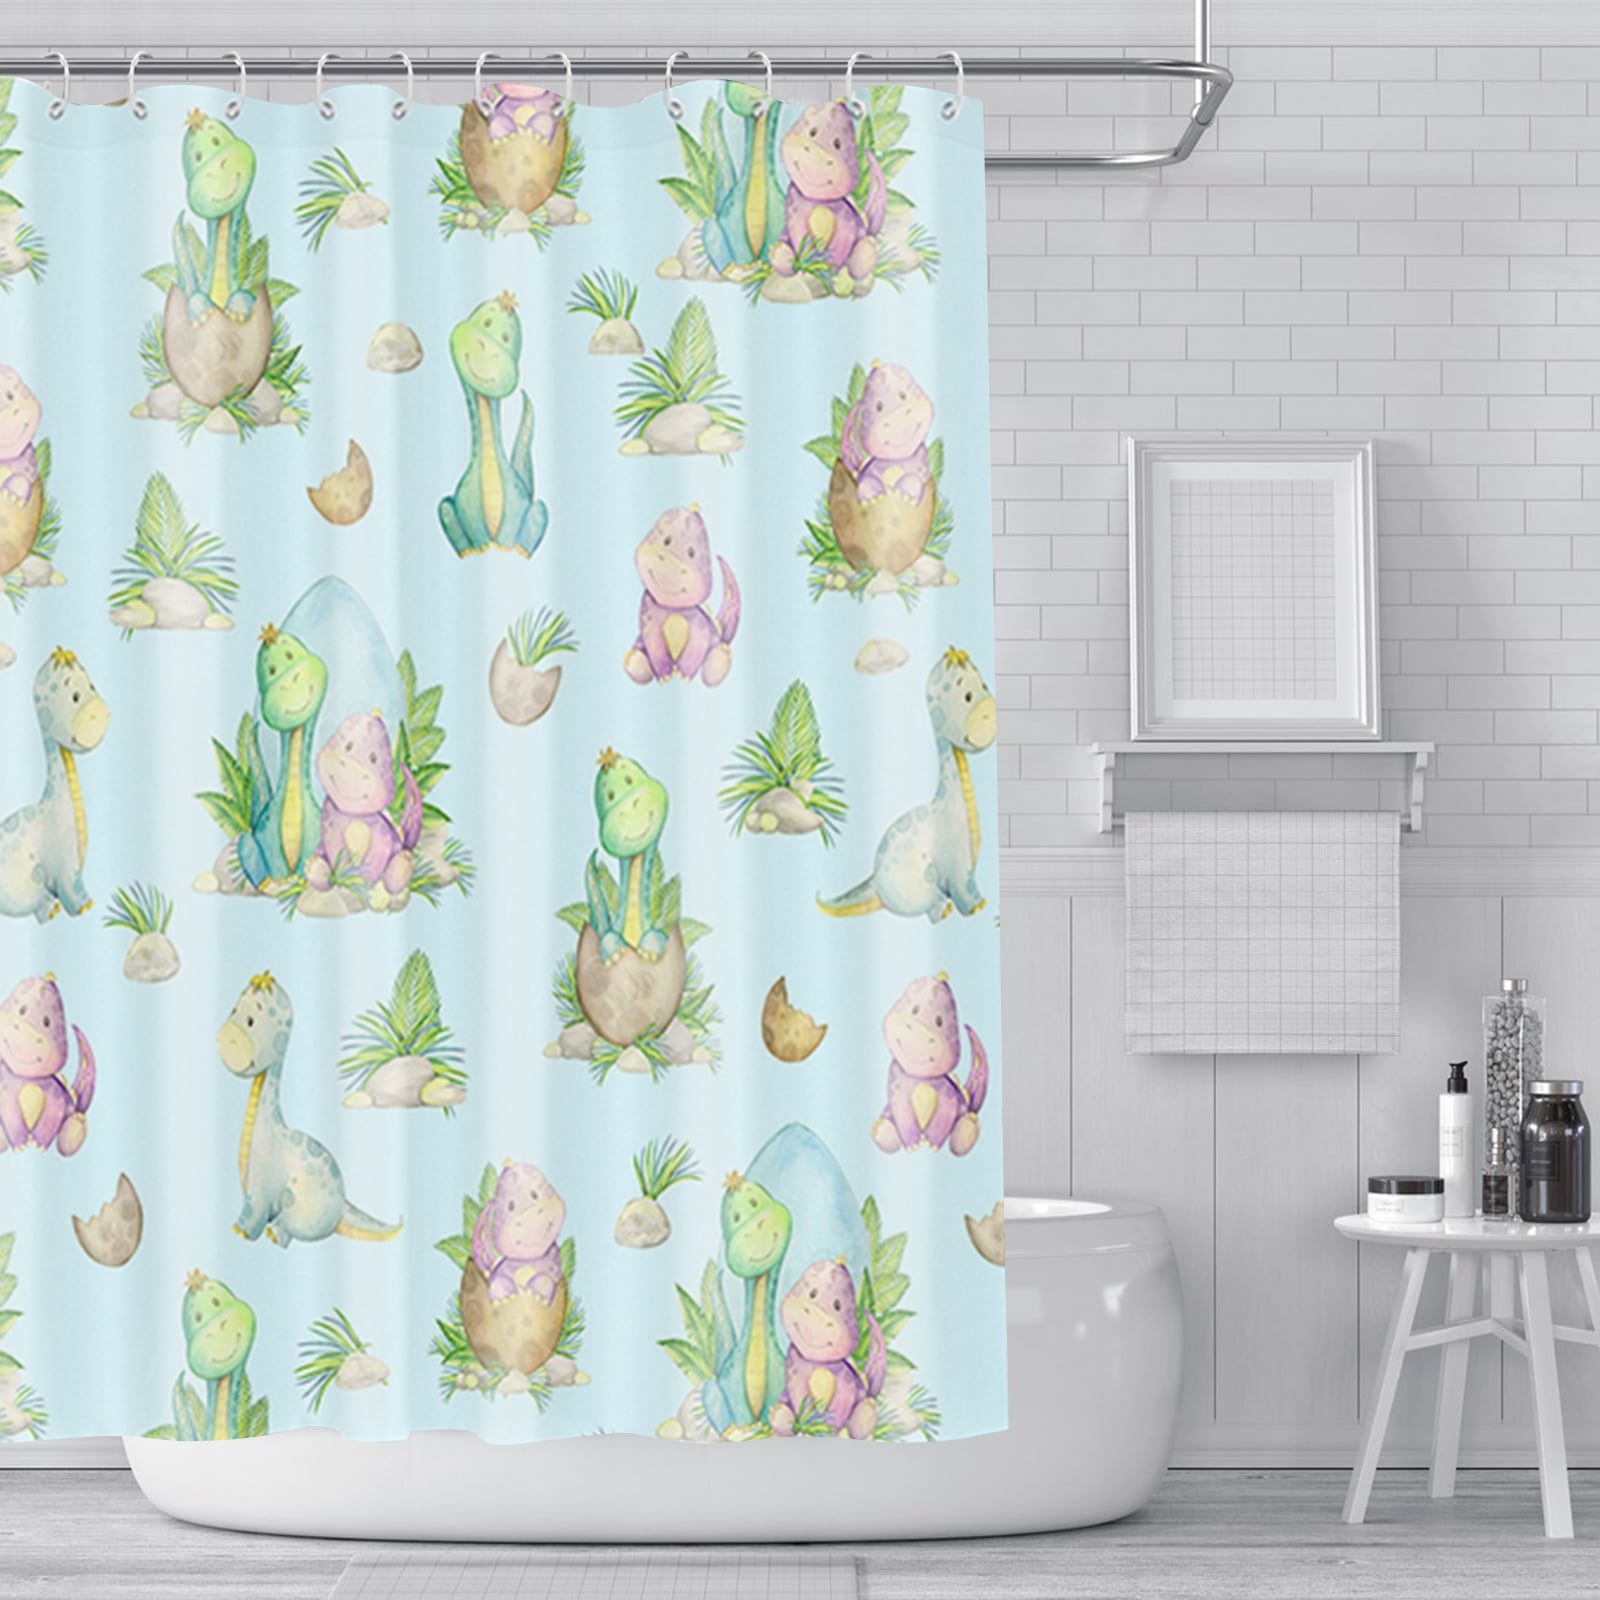 72" Starry Star Angel Waterproof Fabric Shower Curtain Liner Hooks Bathroom Mat 